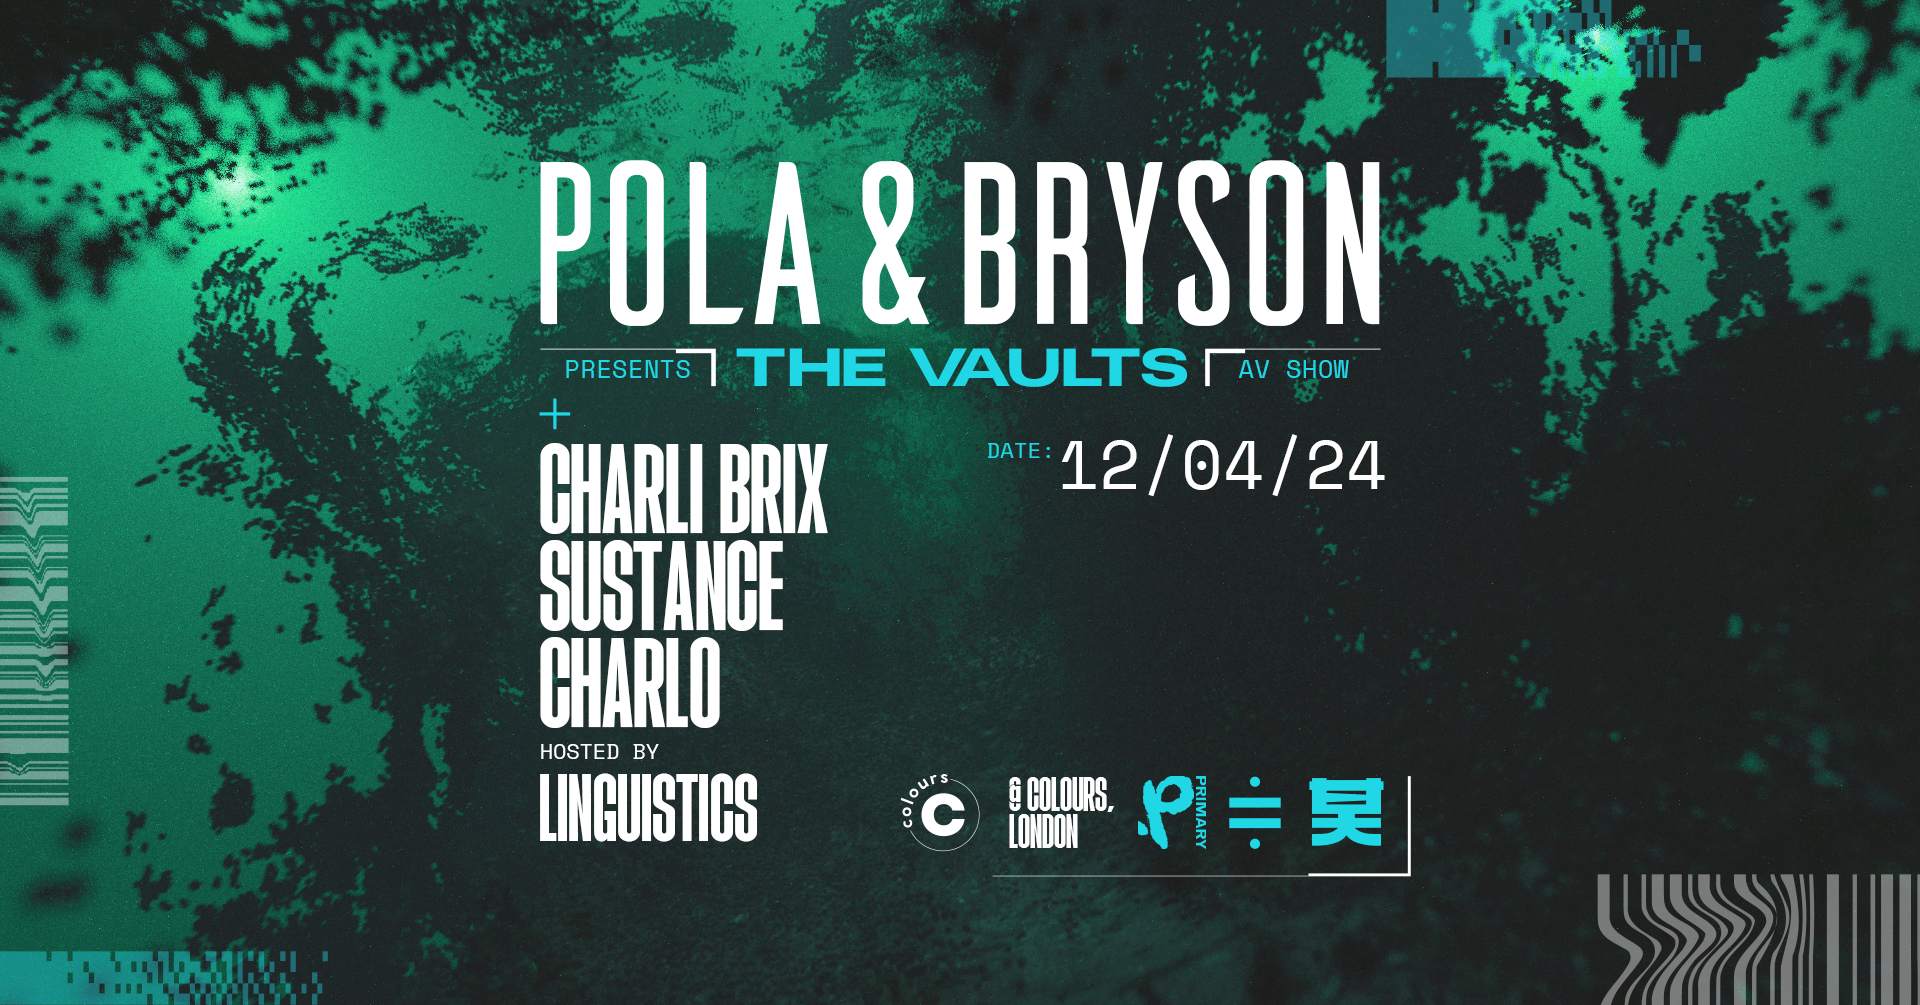 Pola & Bryson: The Vaults - Página frontal